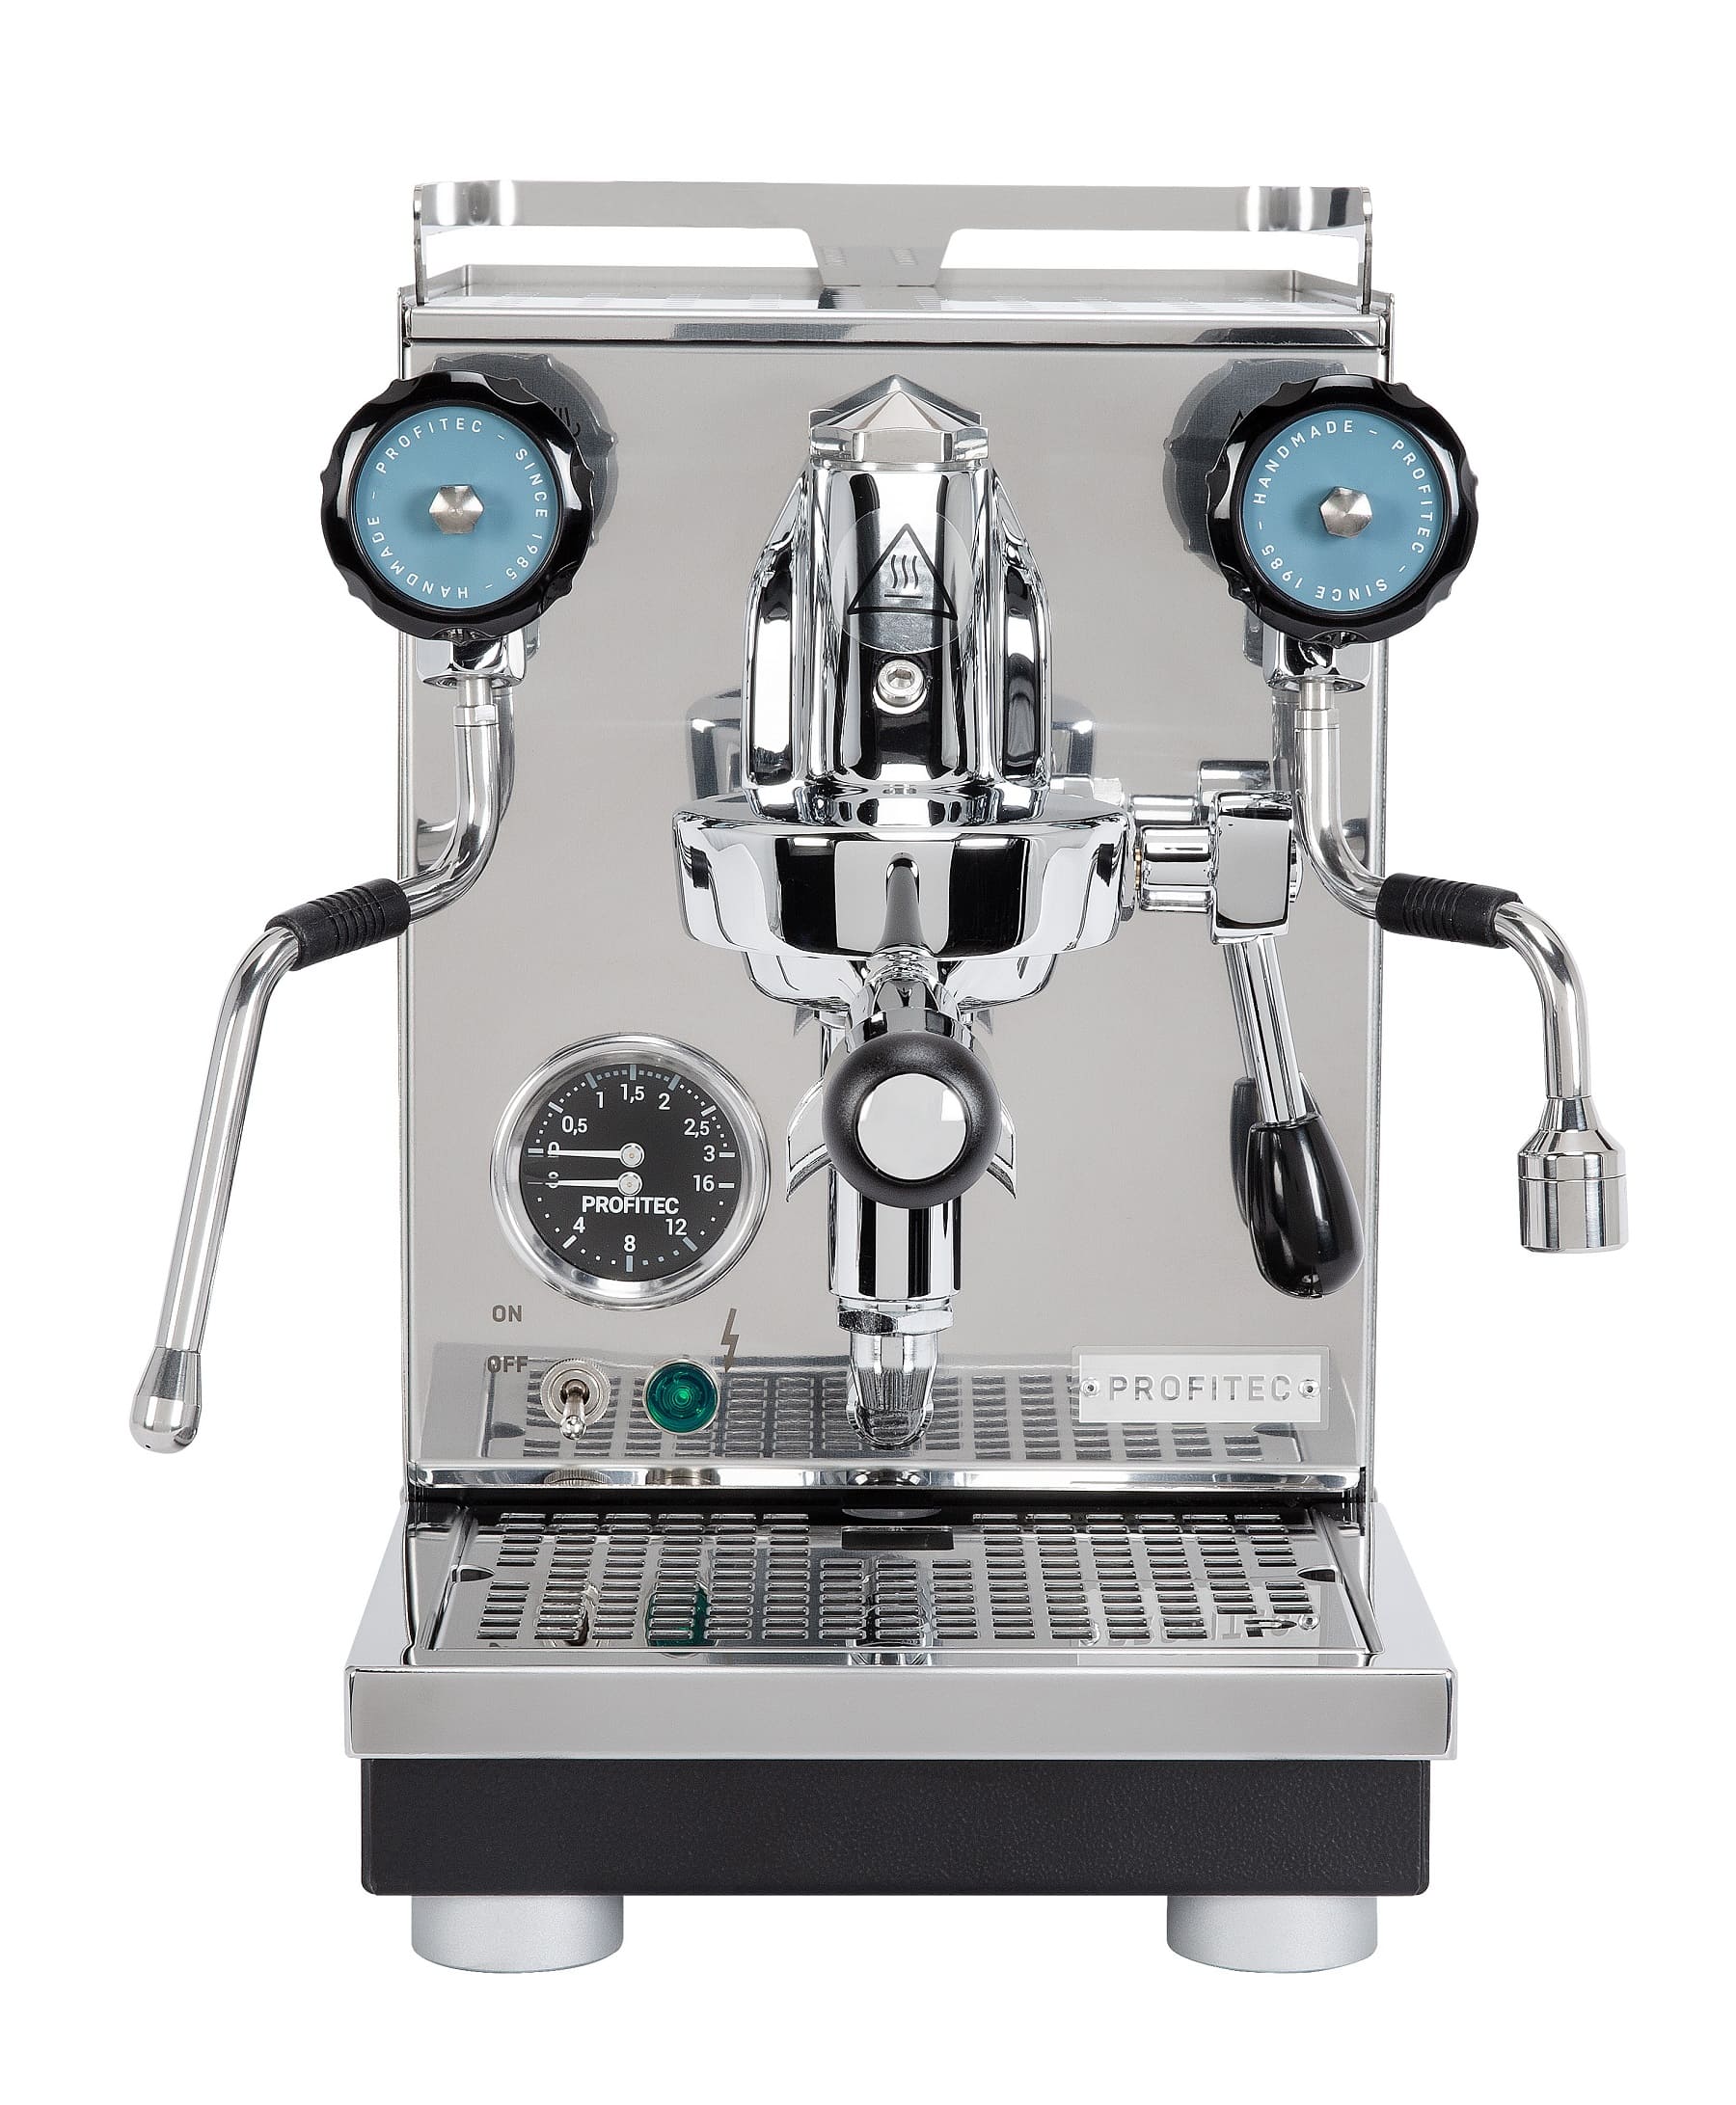 Profitec Pro 400 Espressomaschine - poliert